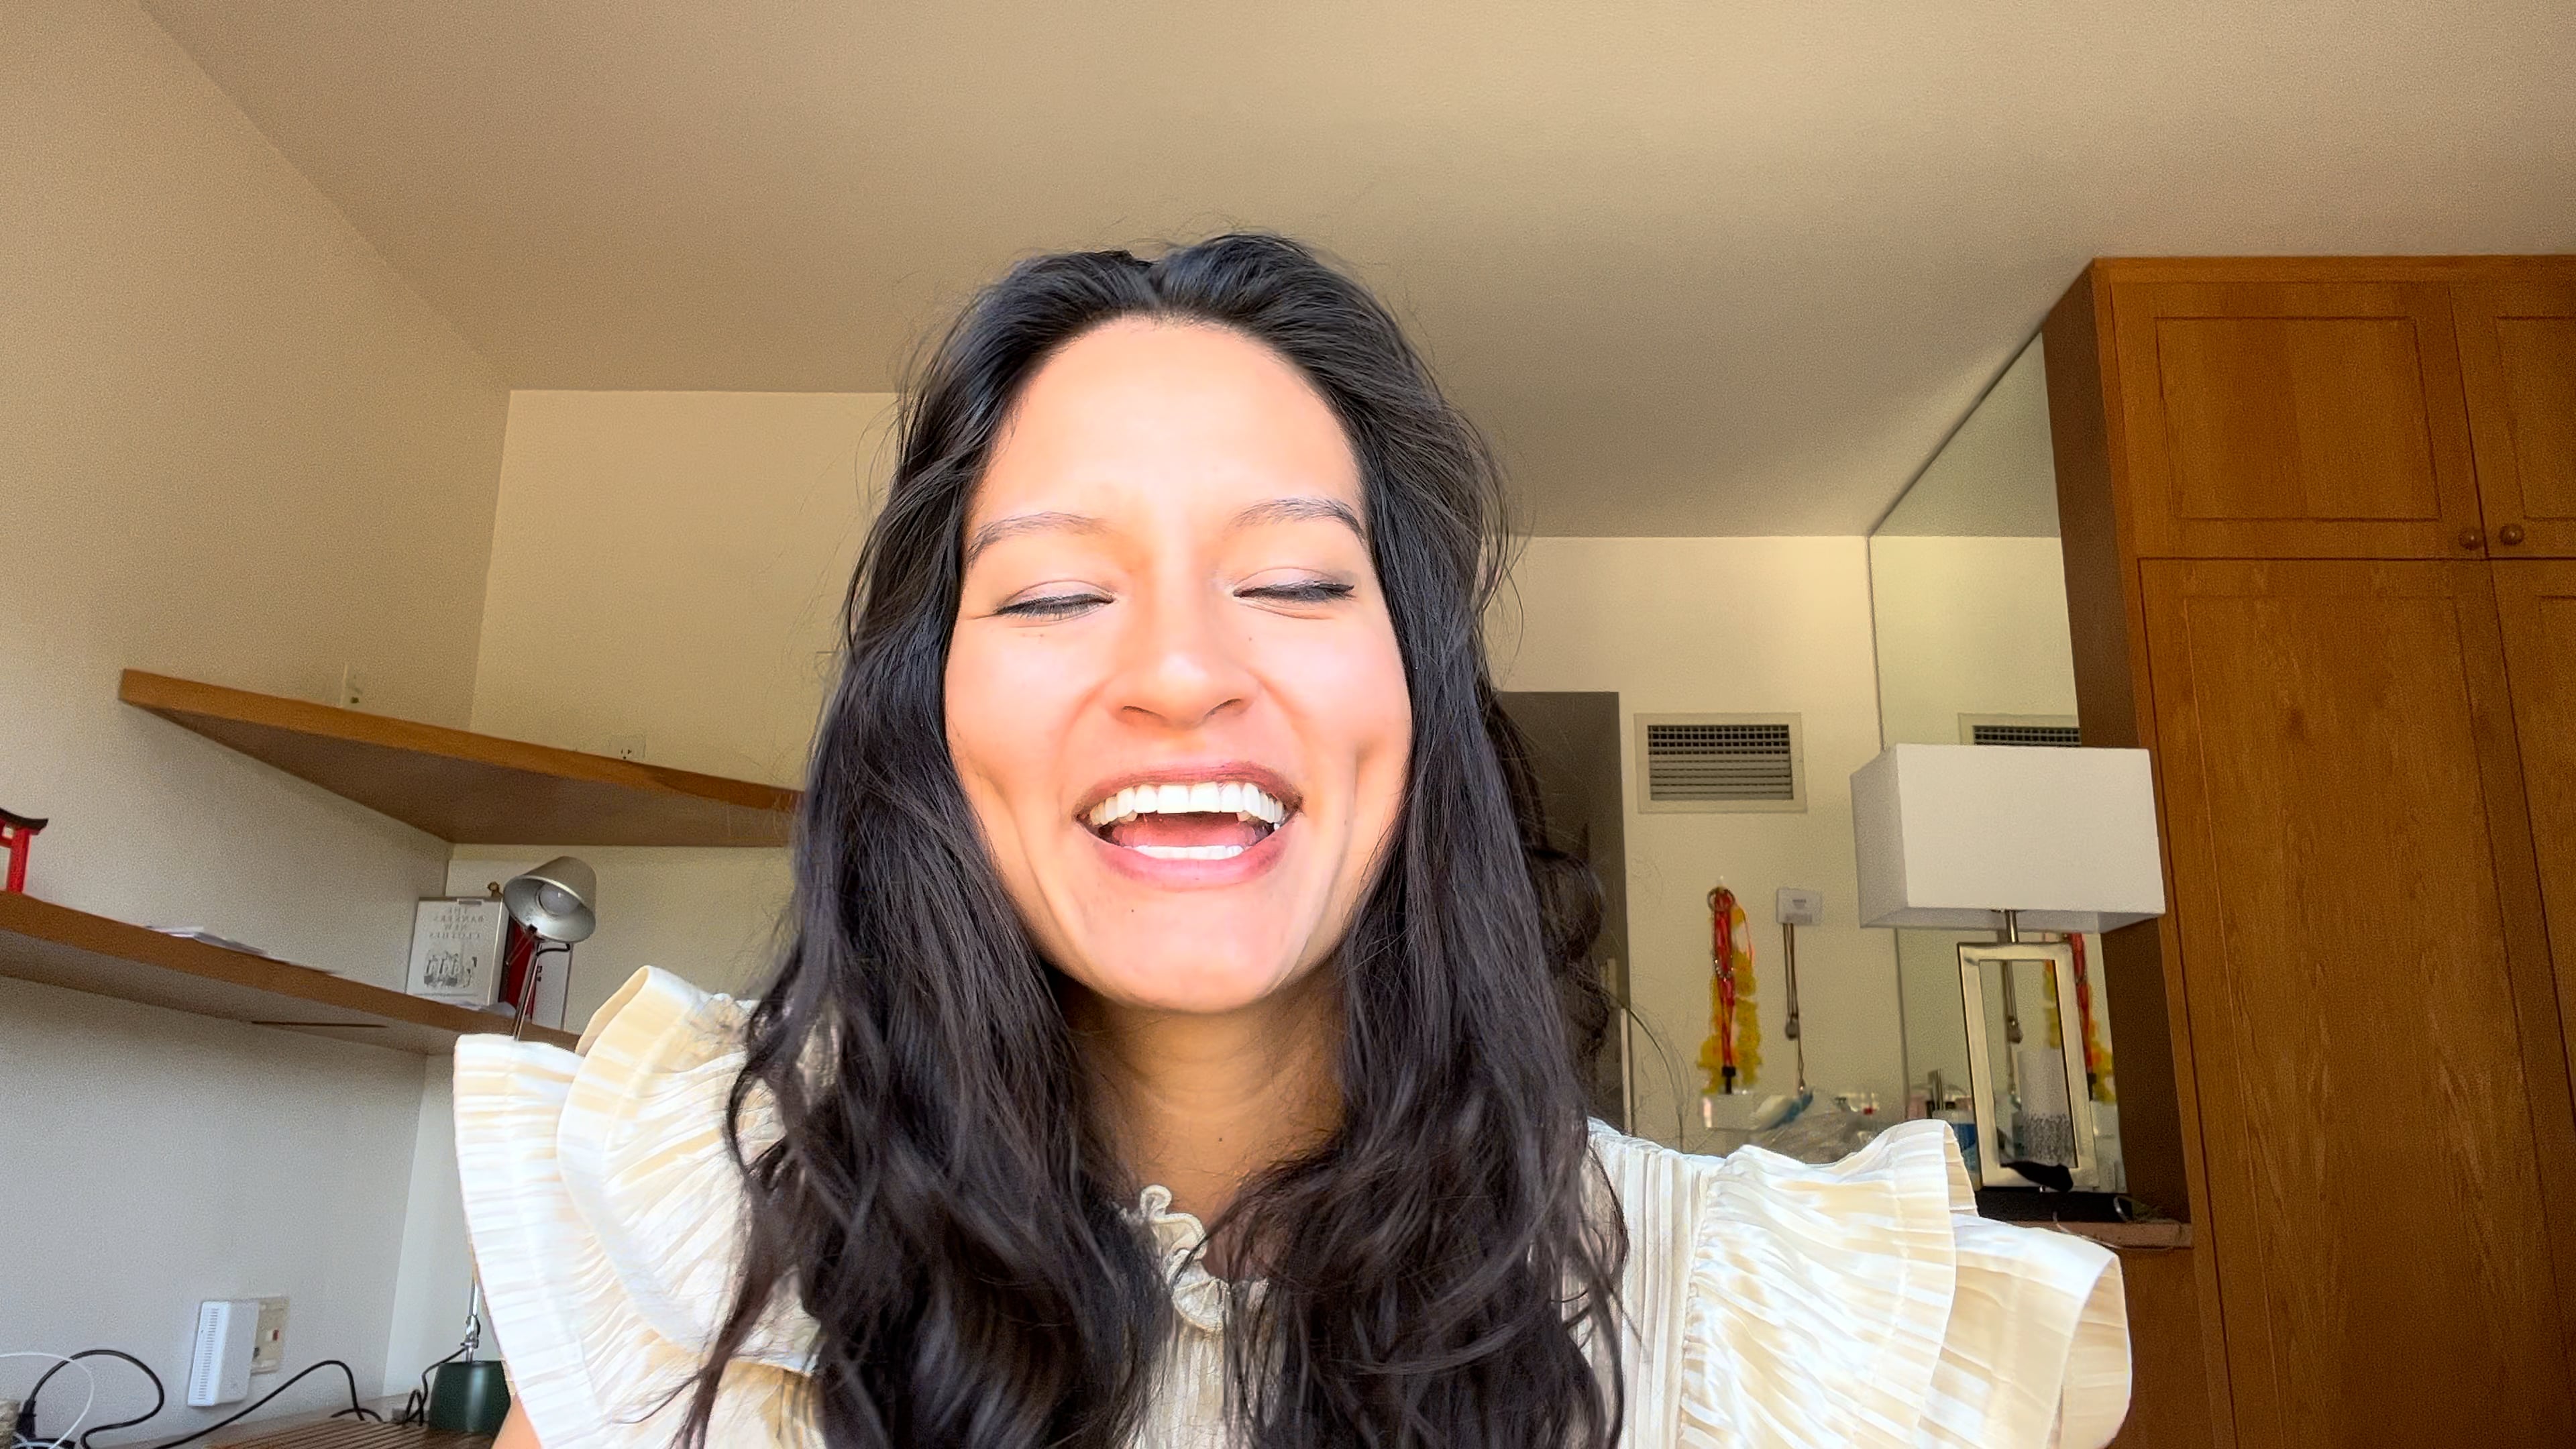 Cheryl Campos - 29 - Harvard / Stanford Student on Vimeo